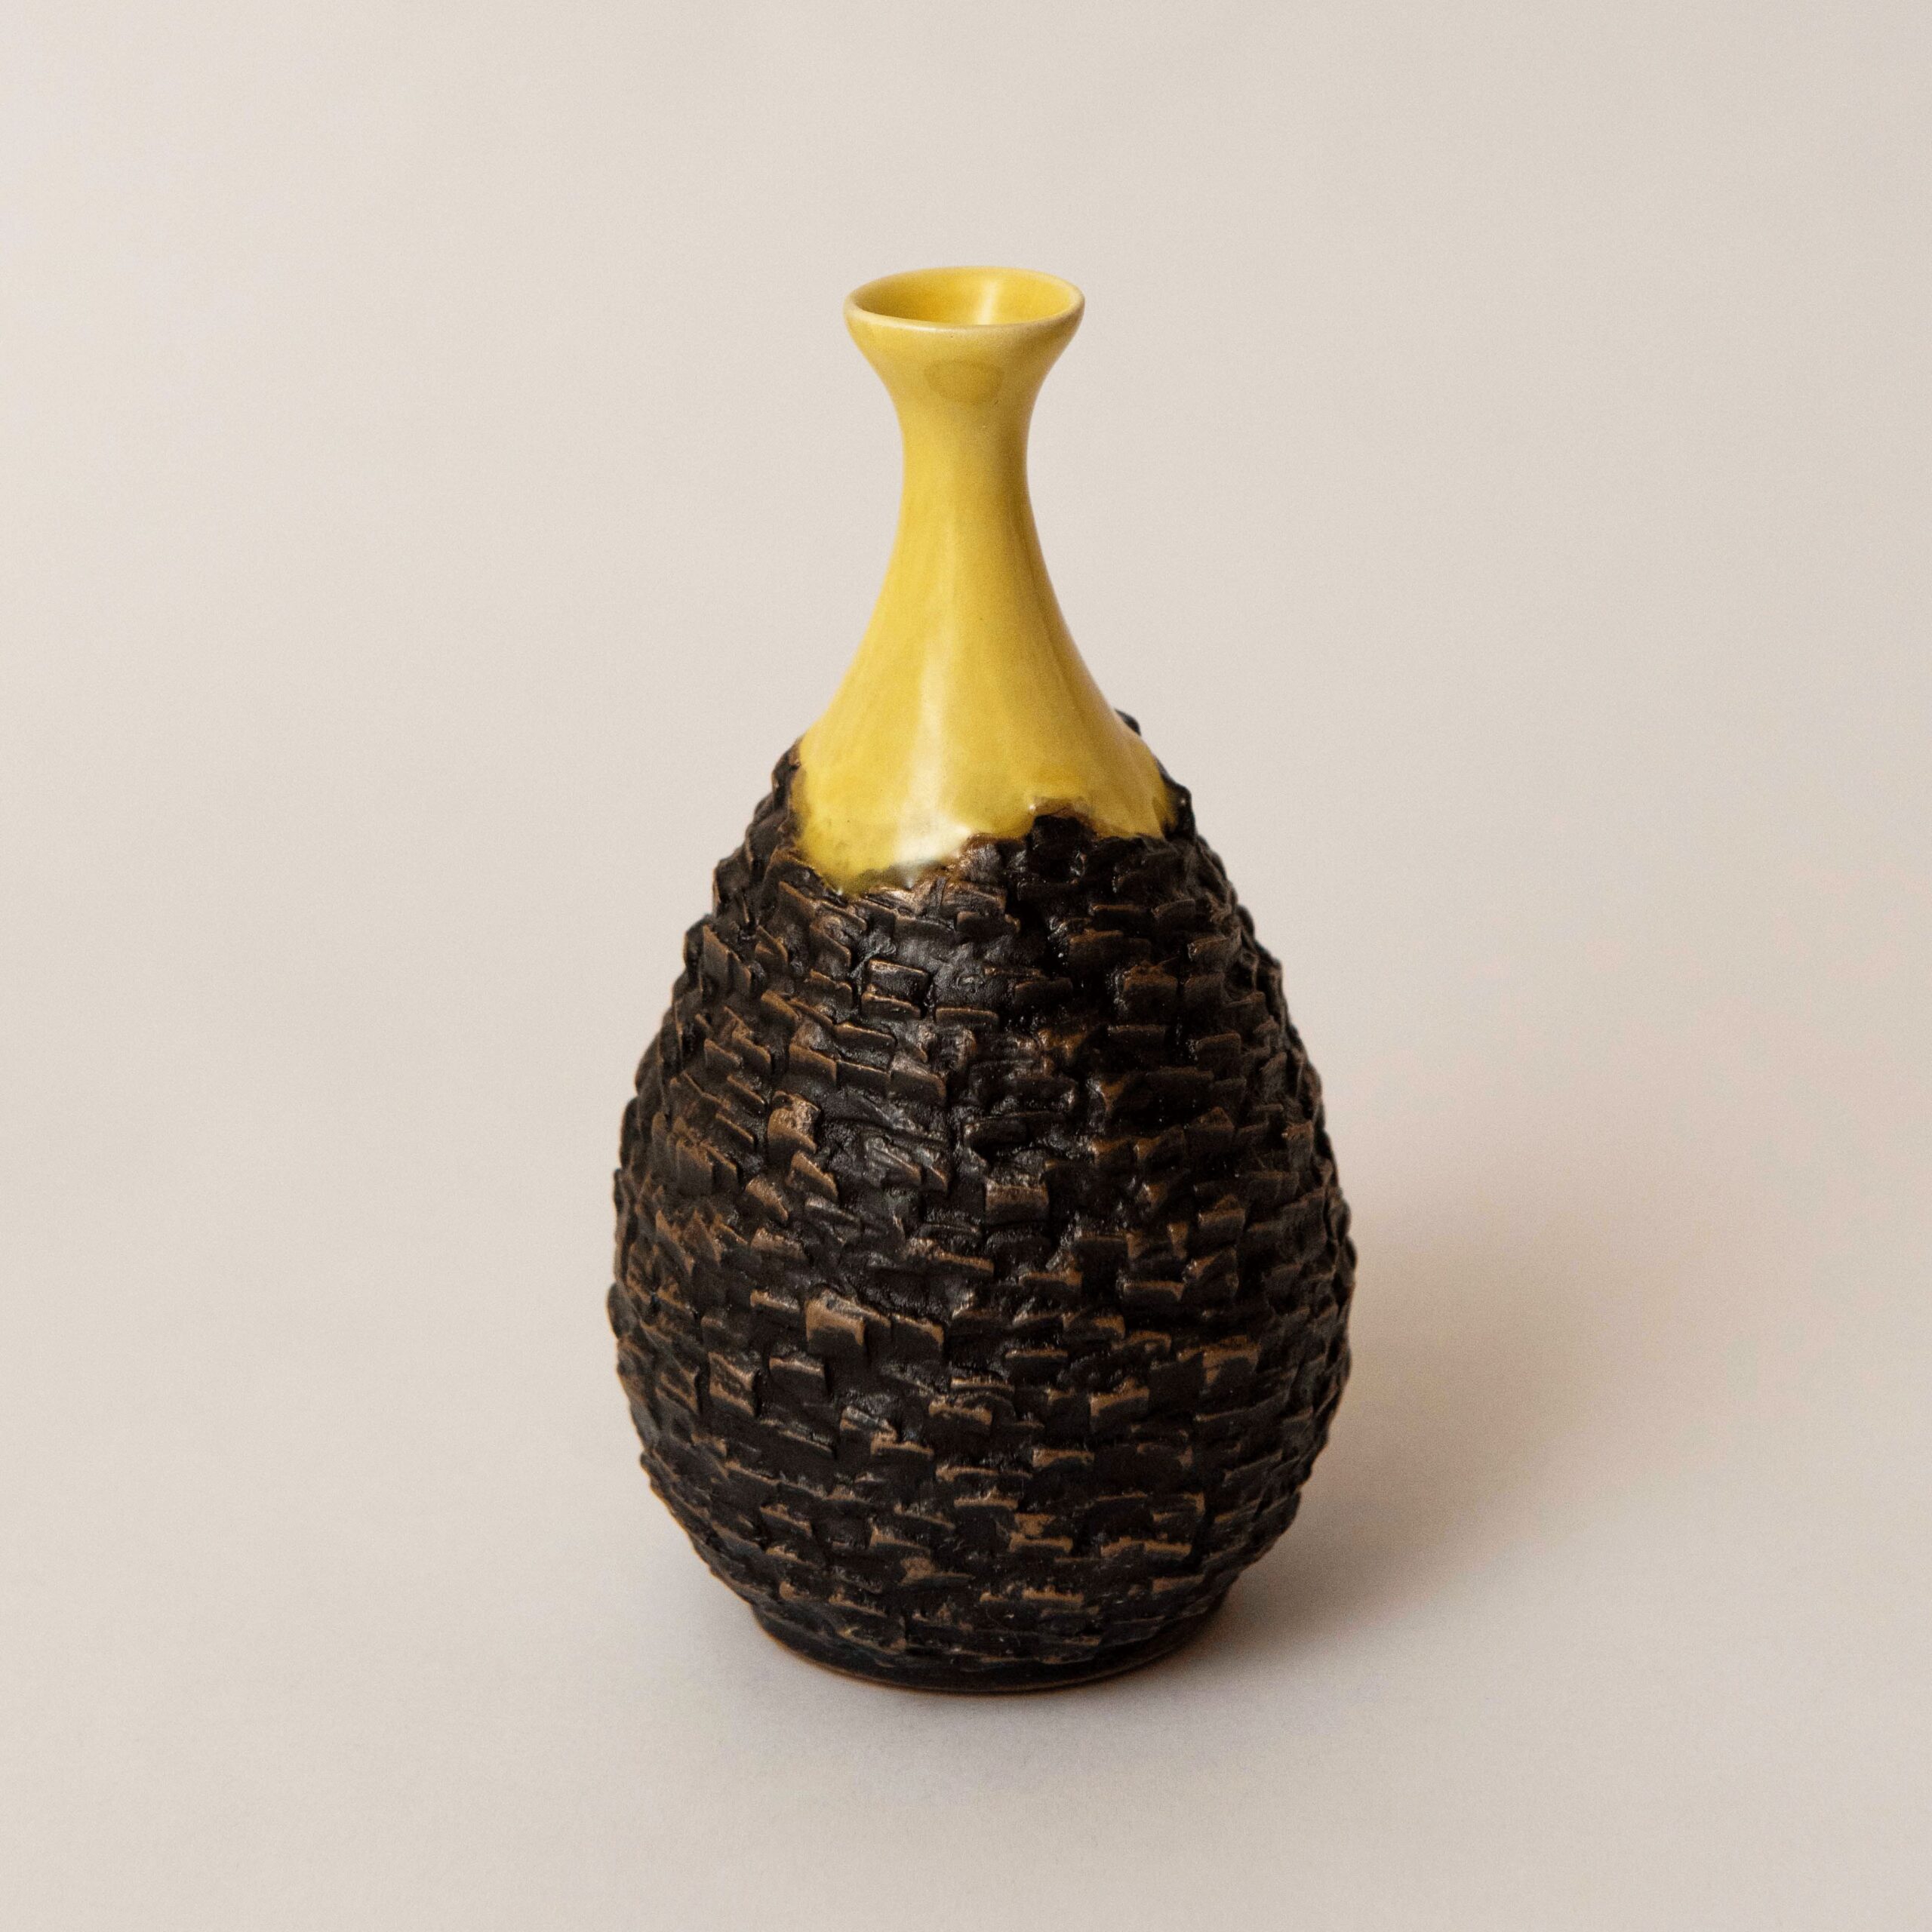 Studio Saboo: Small Orange Rock Vase Product Image 1 of 1